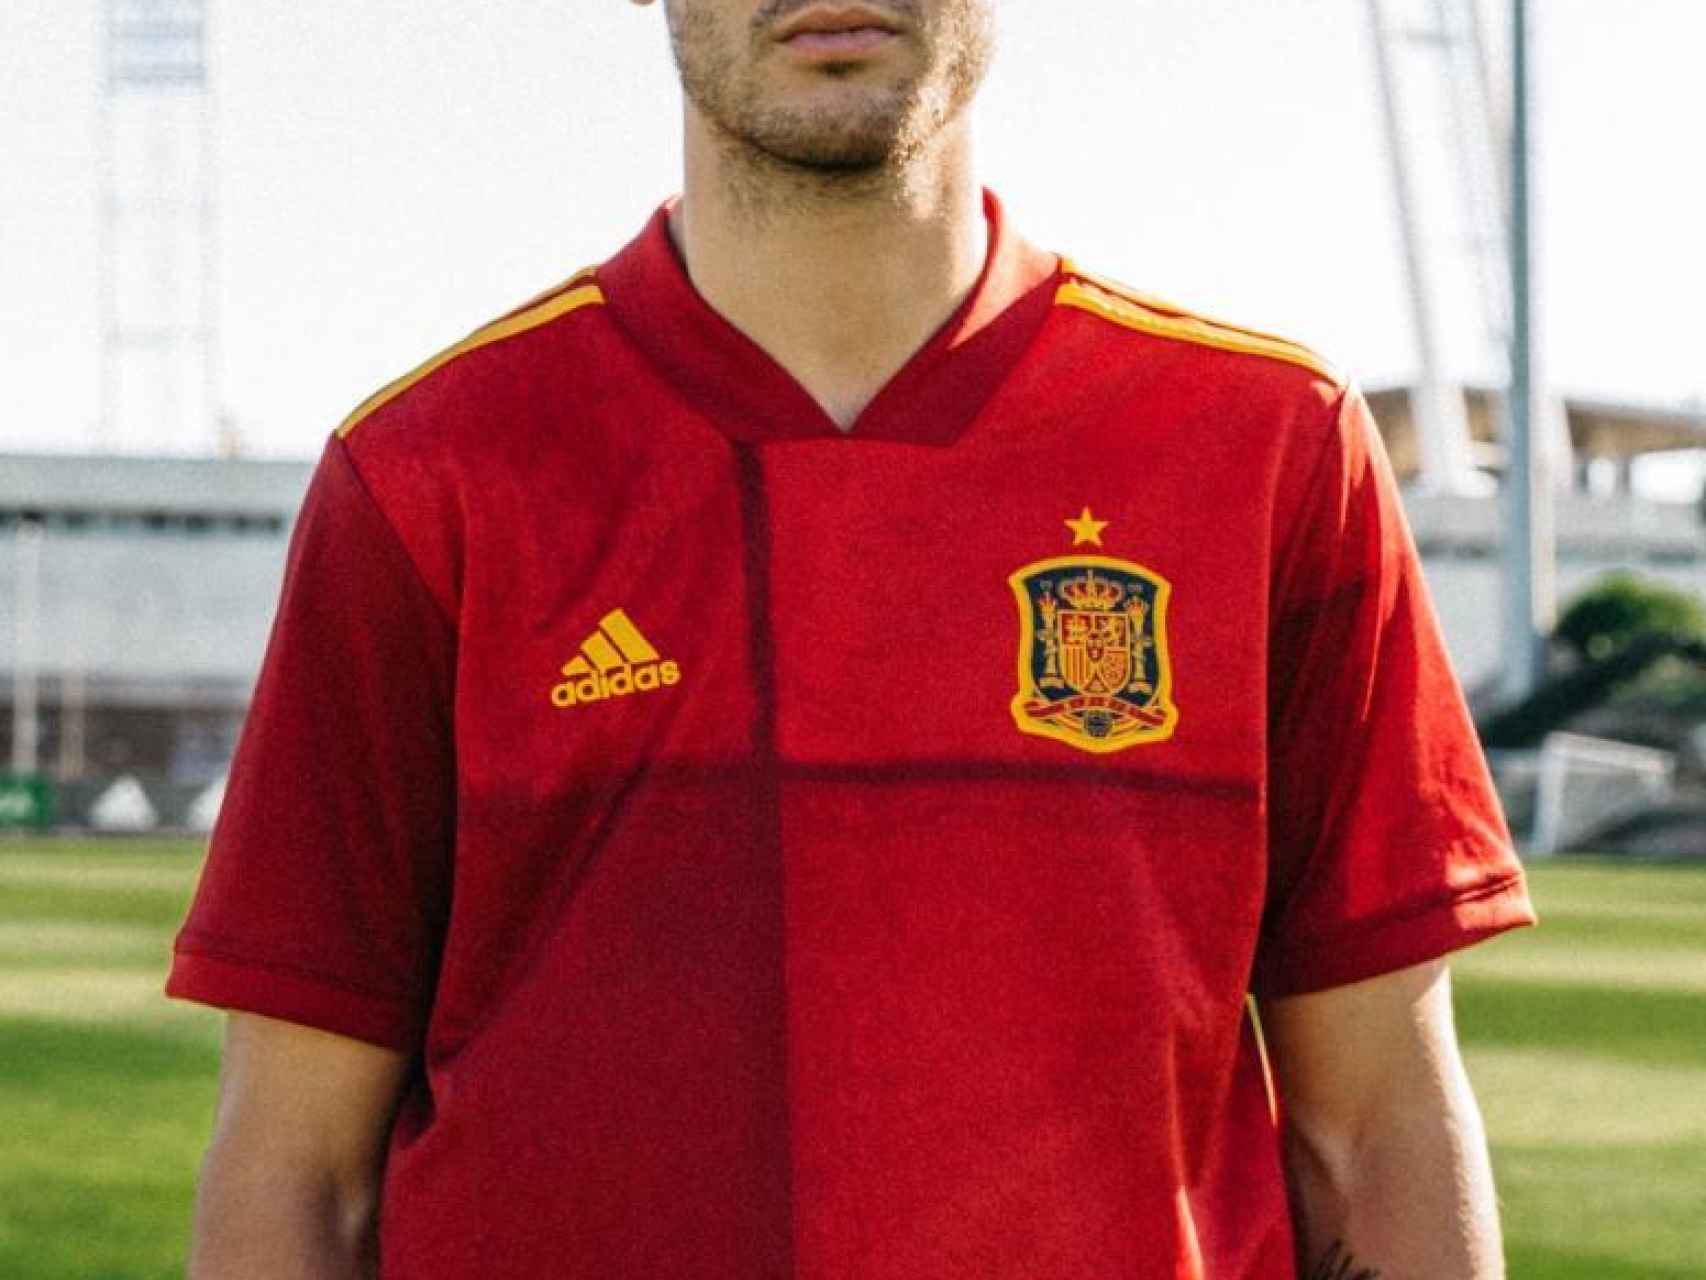 nueva camiseta seleccion española